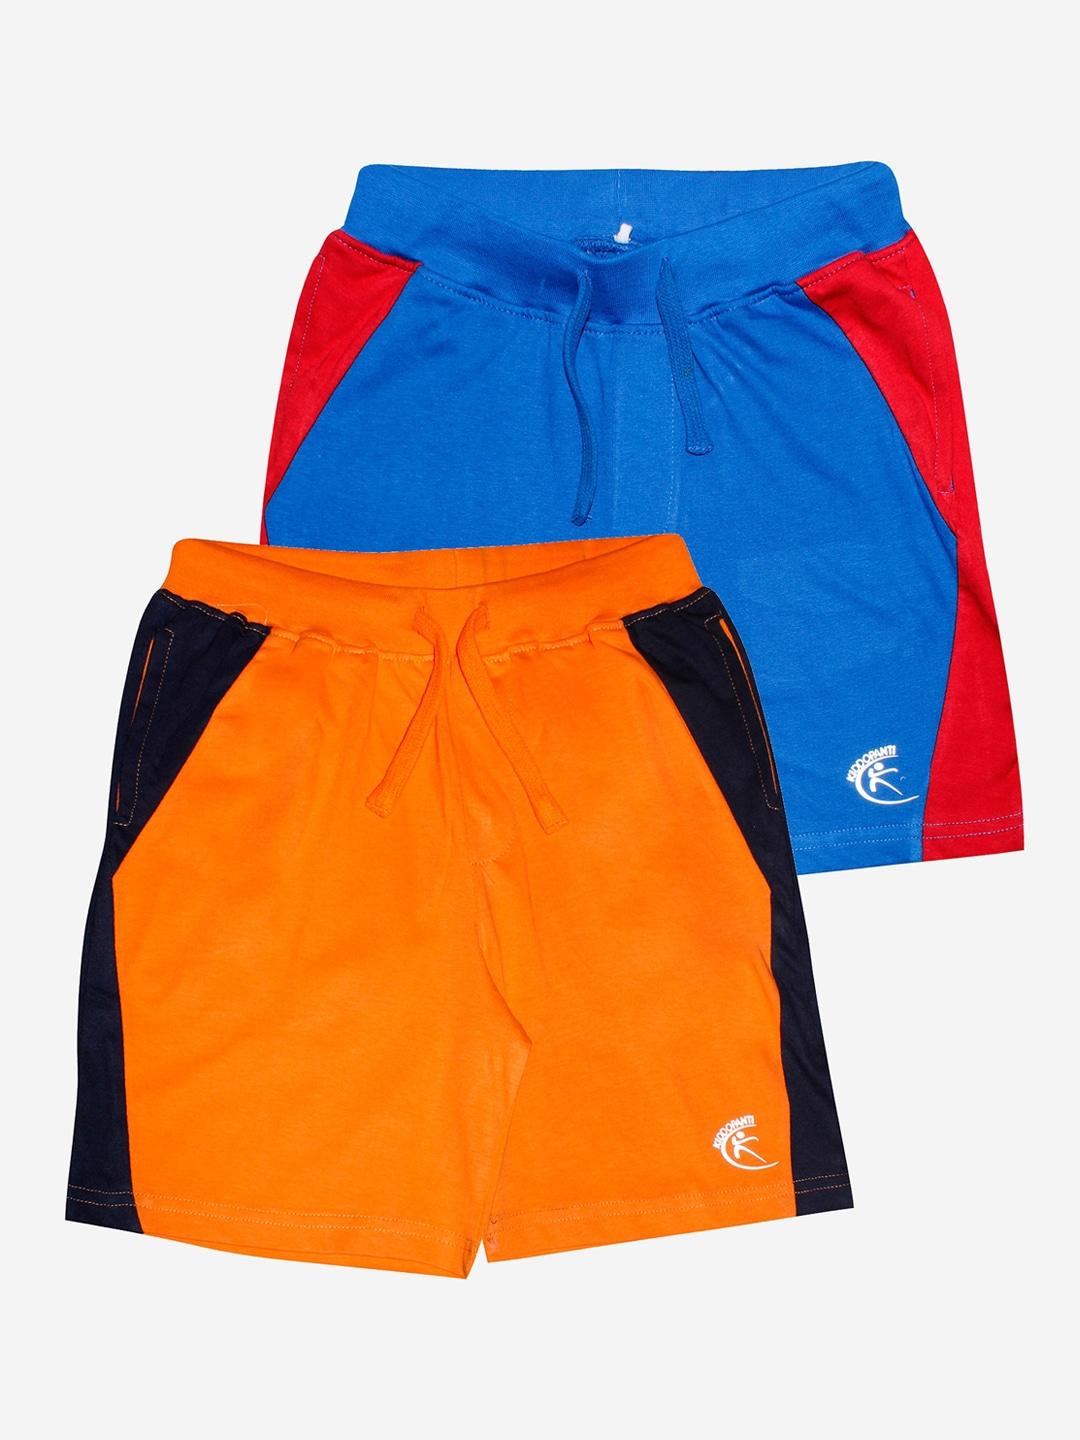 kiddopanti boys pack of 2 orange& blue cotton shorts